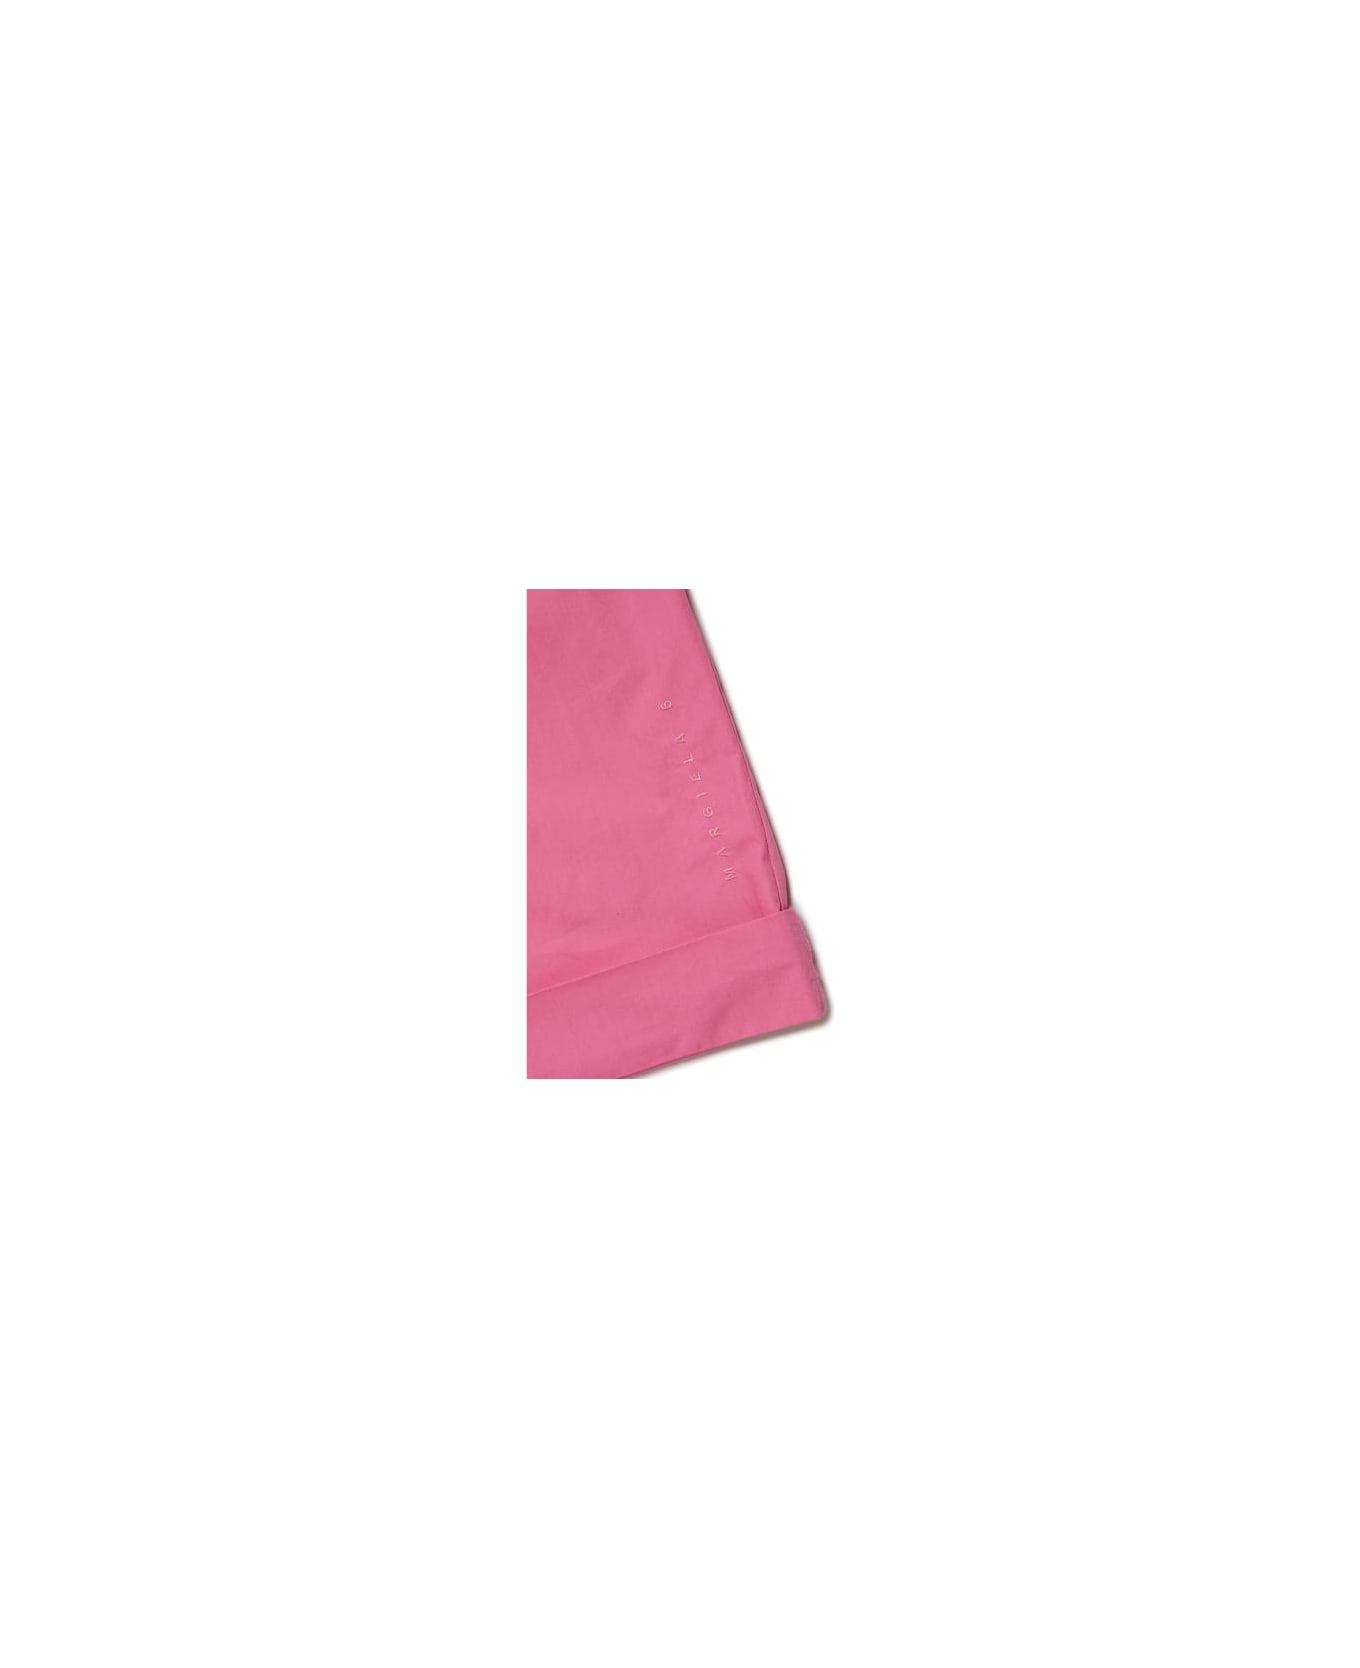 MM6 Maison Margiela Pantaloni Con Logo - Pink